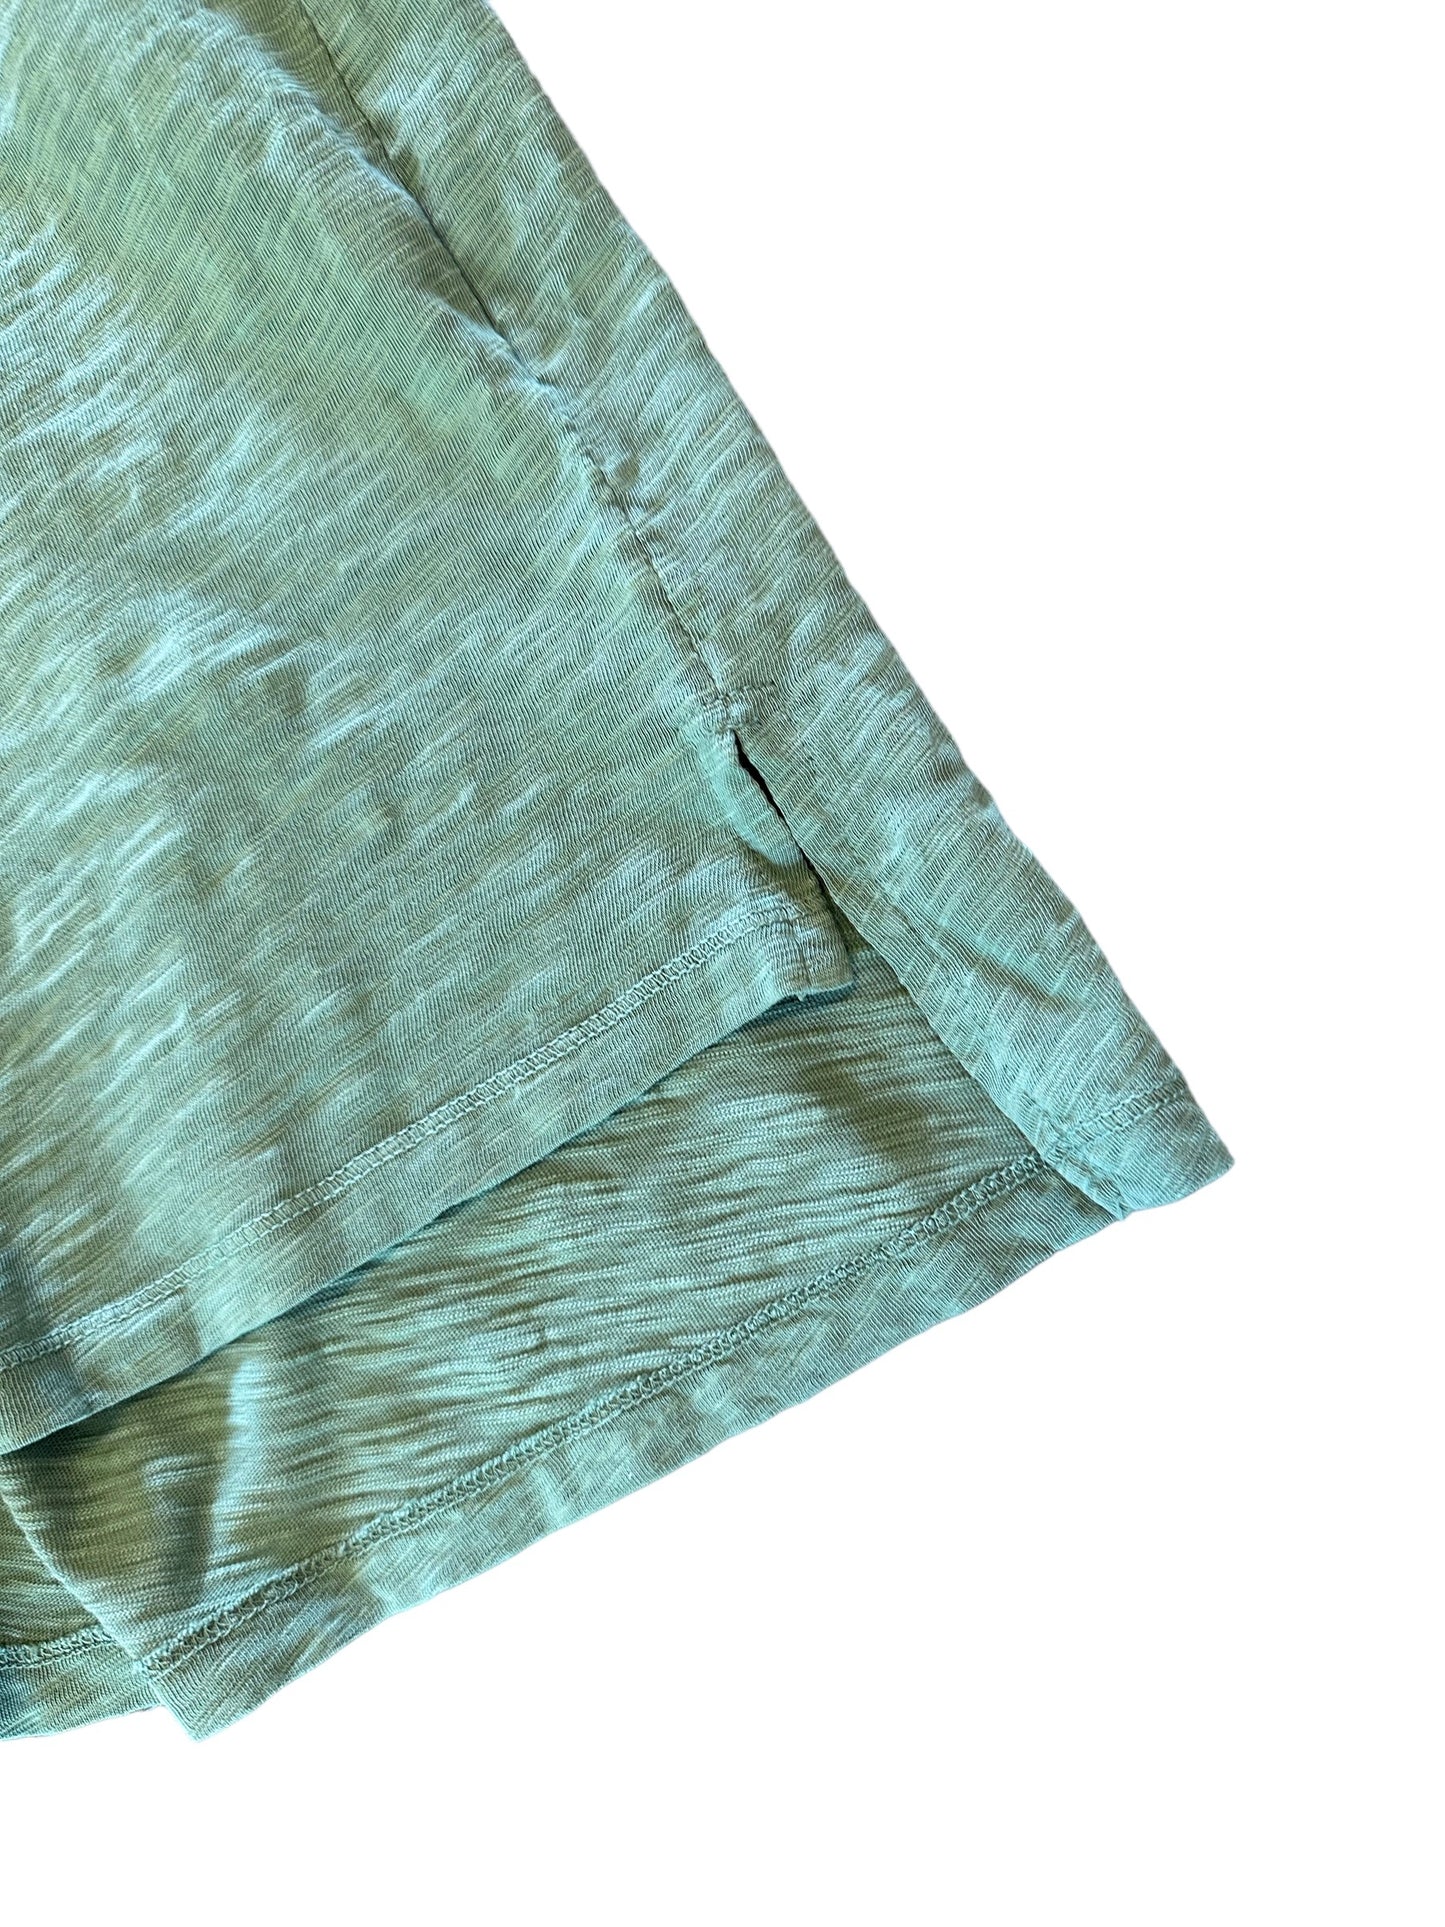 Short Sleeve Open Crew T-shirt Dress in mint moss by Mododoc